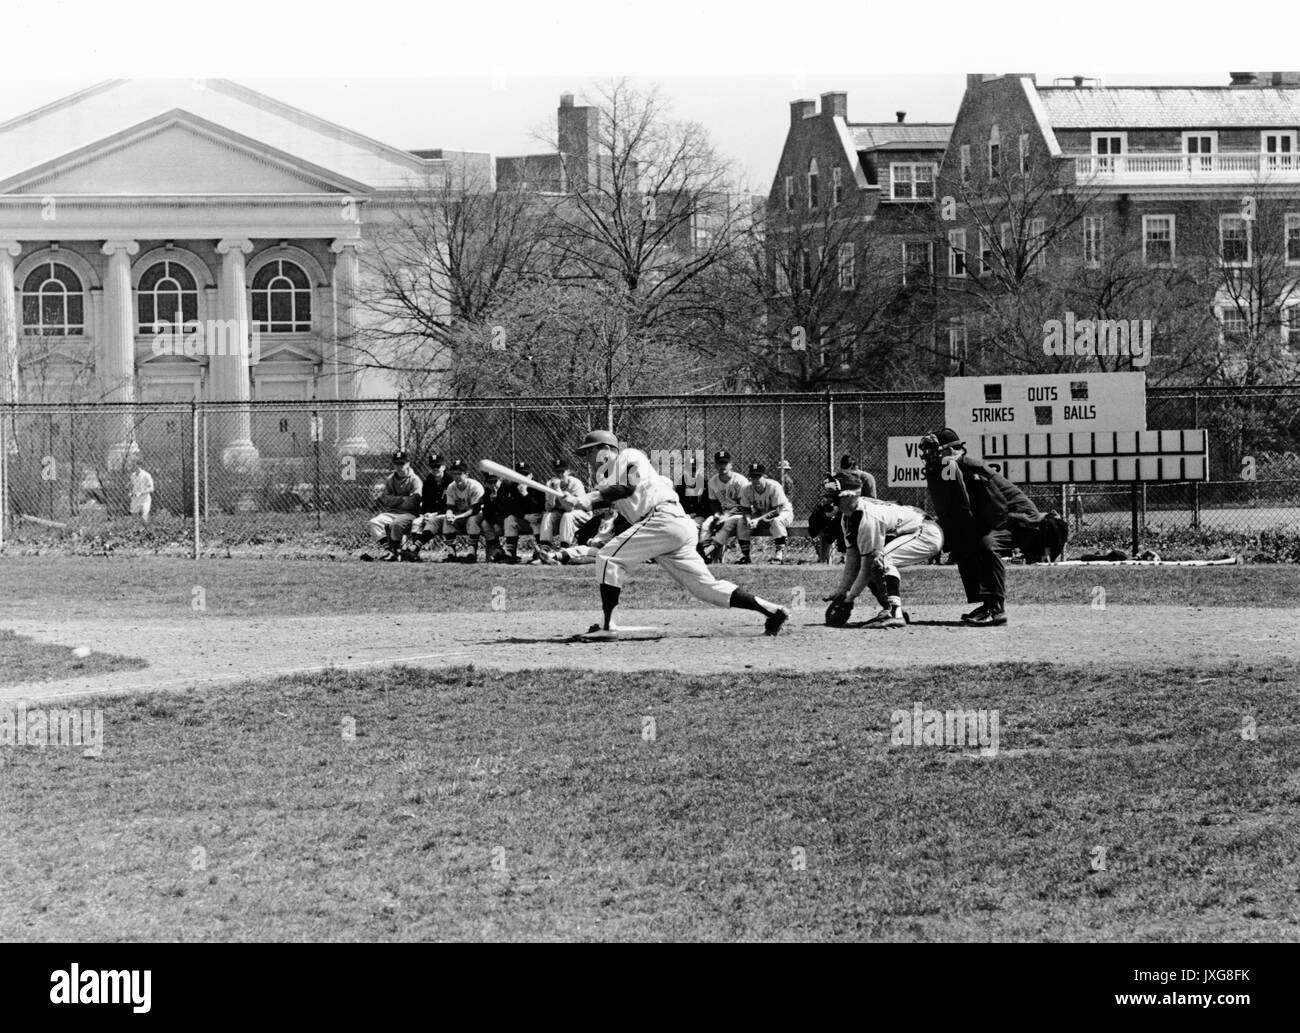 Baseball Action shot taken during the Hopkins vs Harvard game, Hopkins player is at bat, 1963. Stock Photo